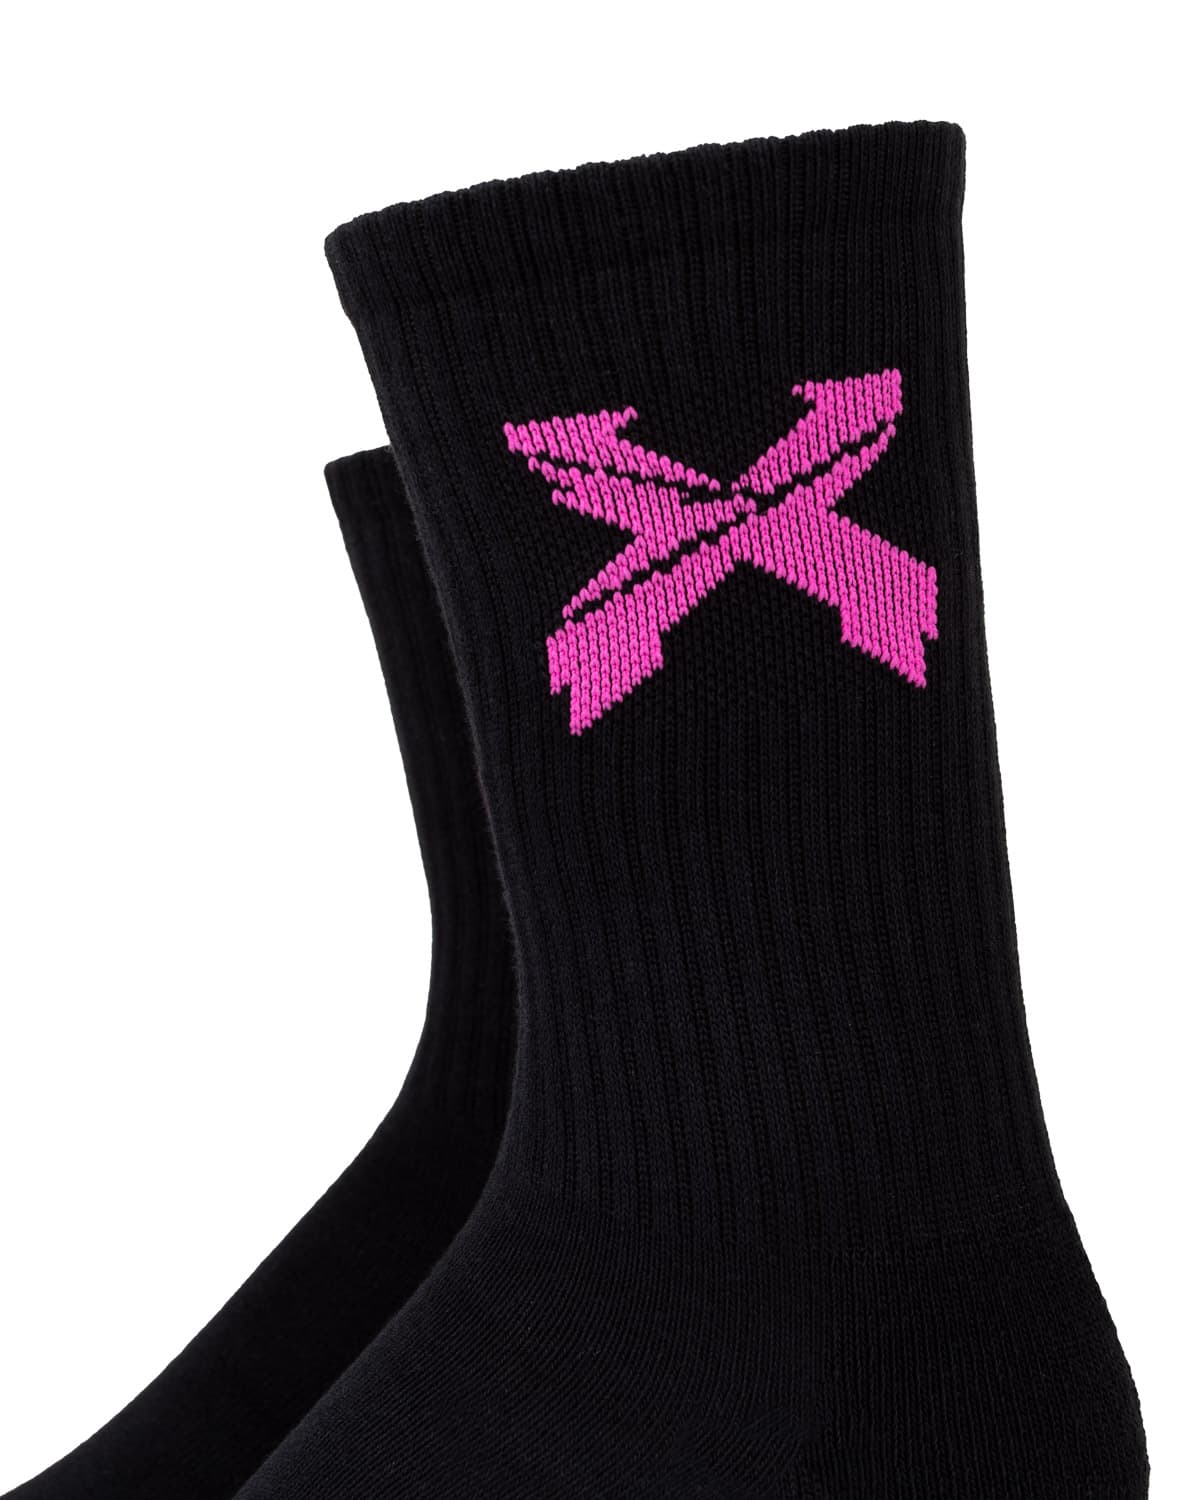 Sliced Logo Socks (Black/Pink)